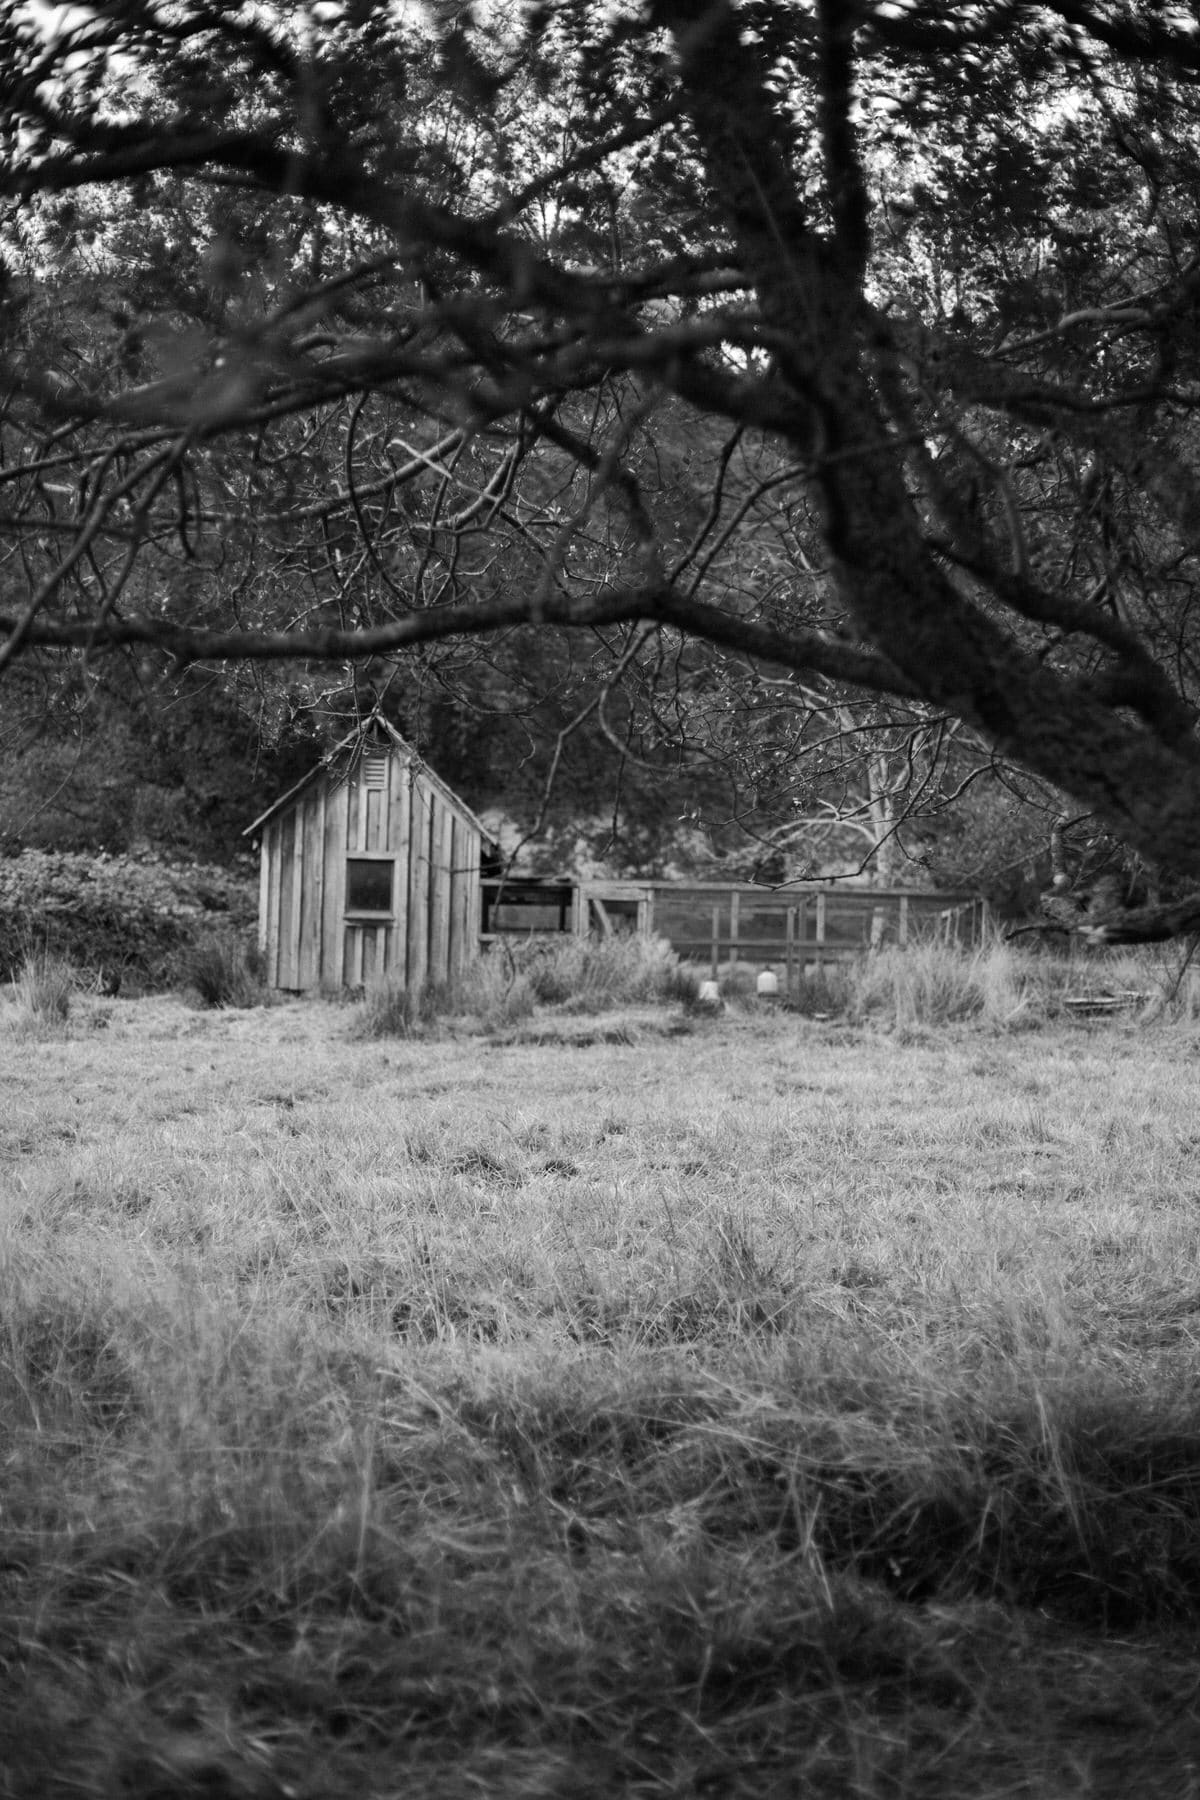 San-Juan-Islands-Washington-black-and-white-fine-art-photography-by-Studio-L-photographer-Laura-Schneider-_8602